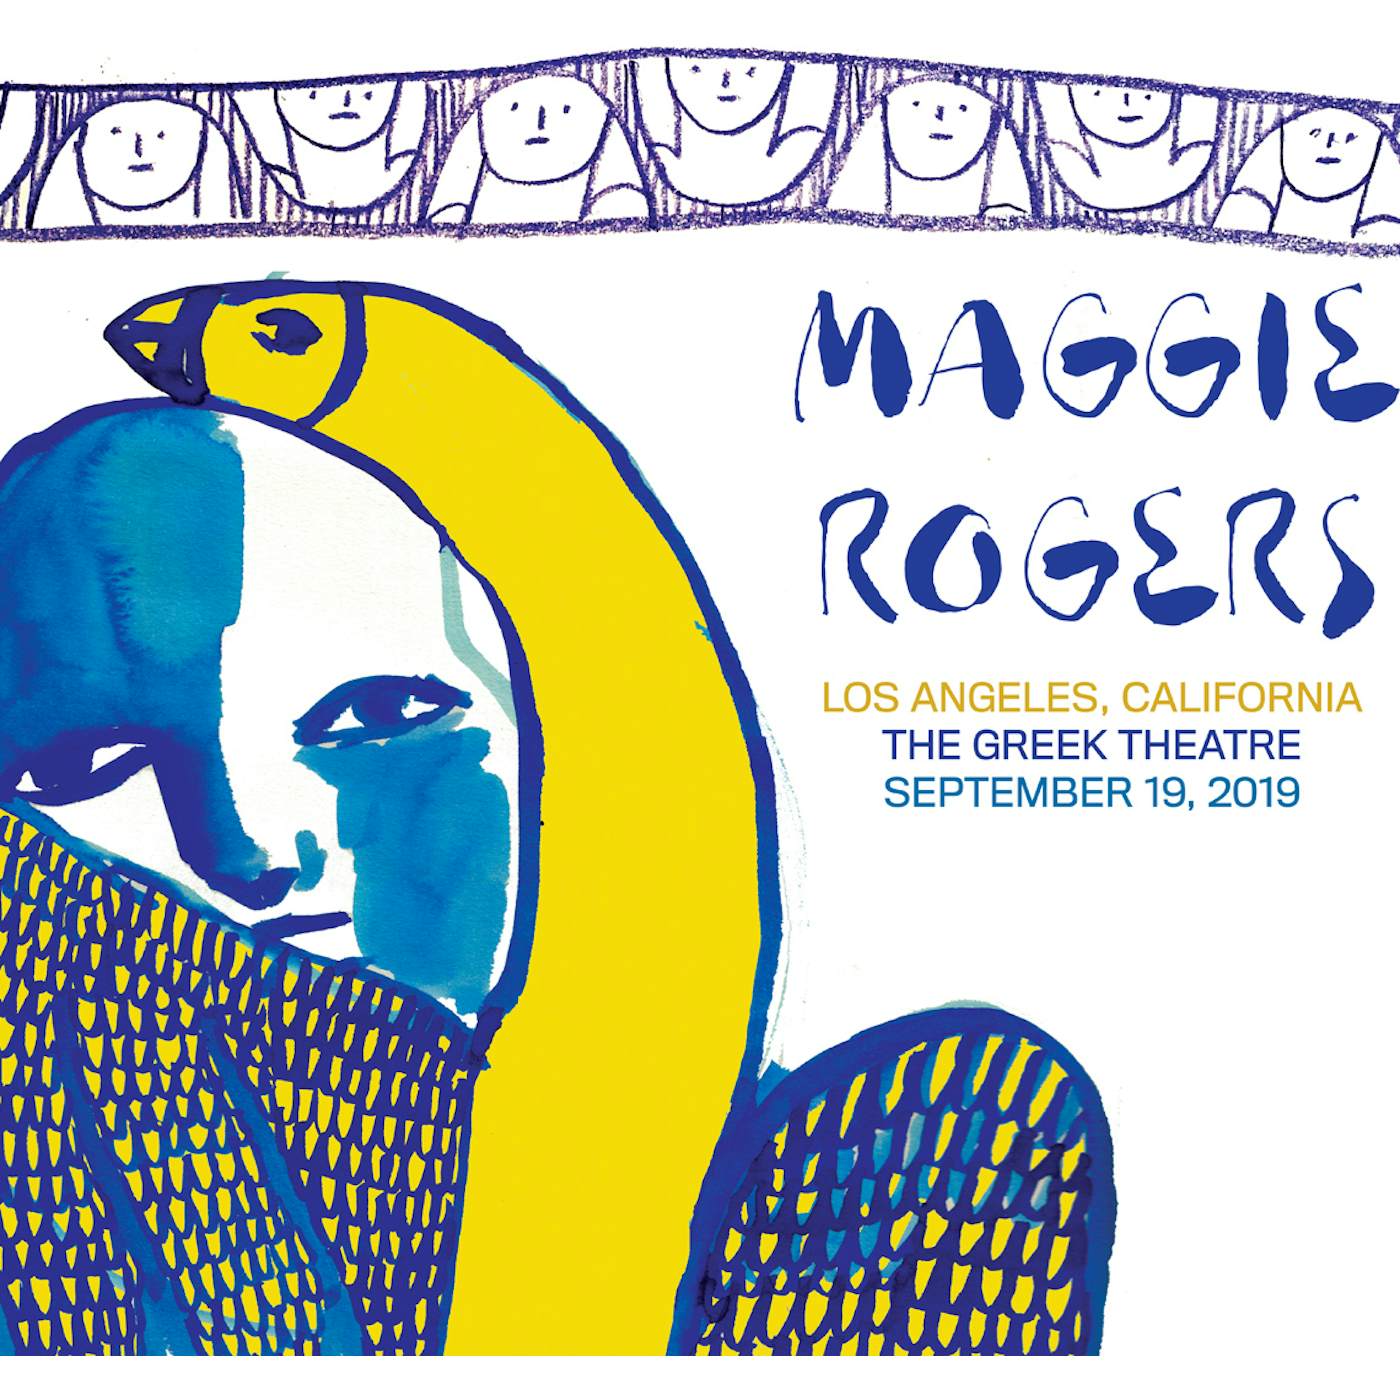 Maggie Rogers Los Angeles Greek Theatre Poster September 19, 2019